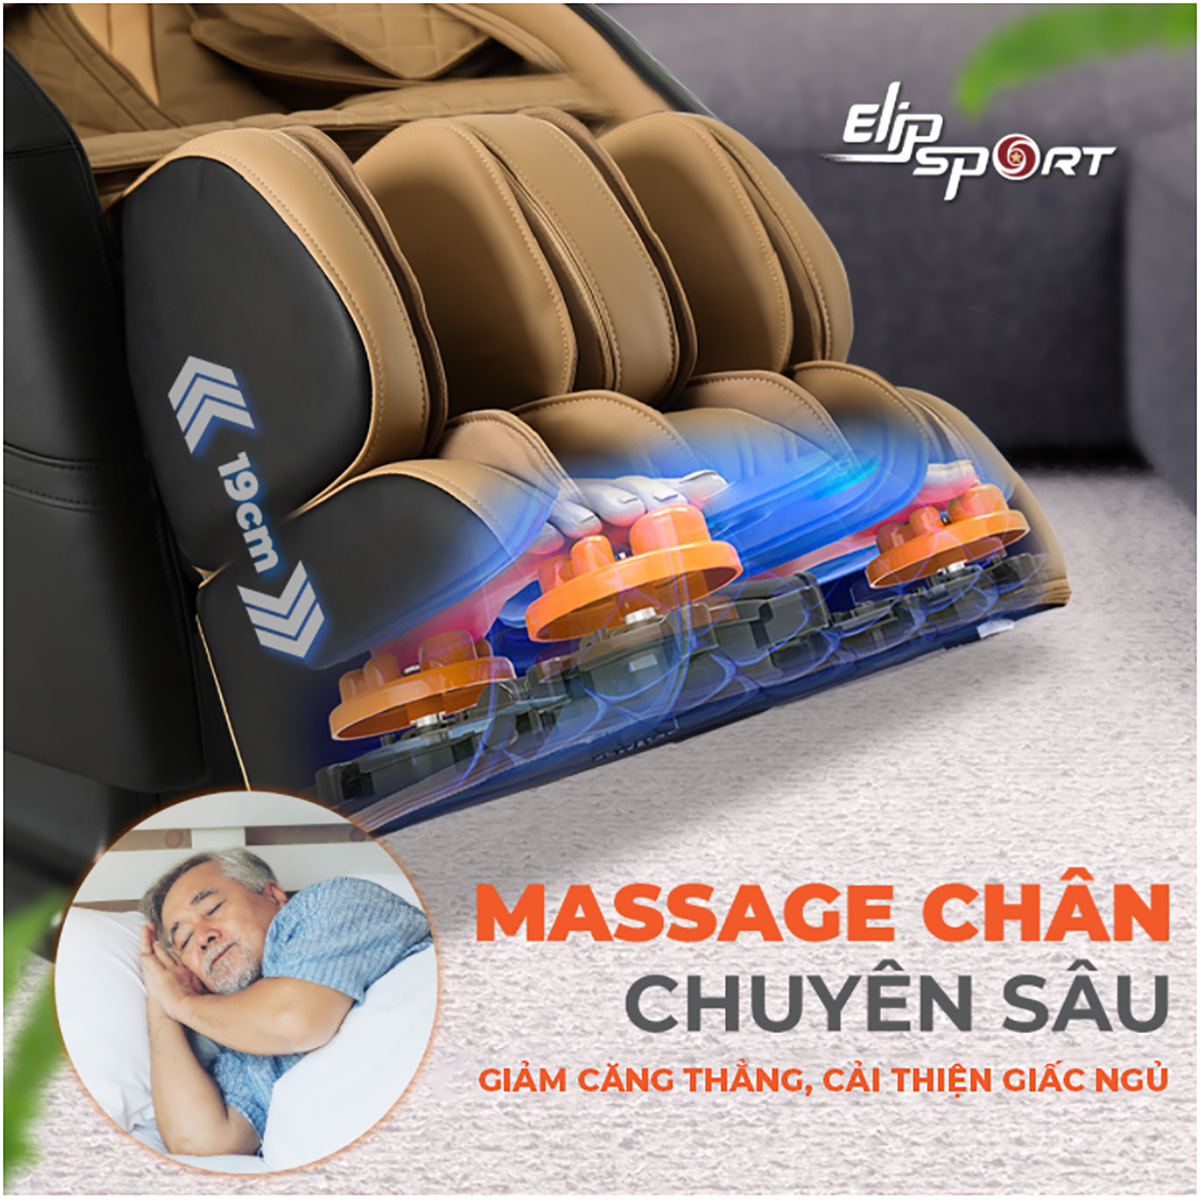 ghe-massage-elip-ares-massage-chan